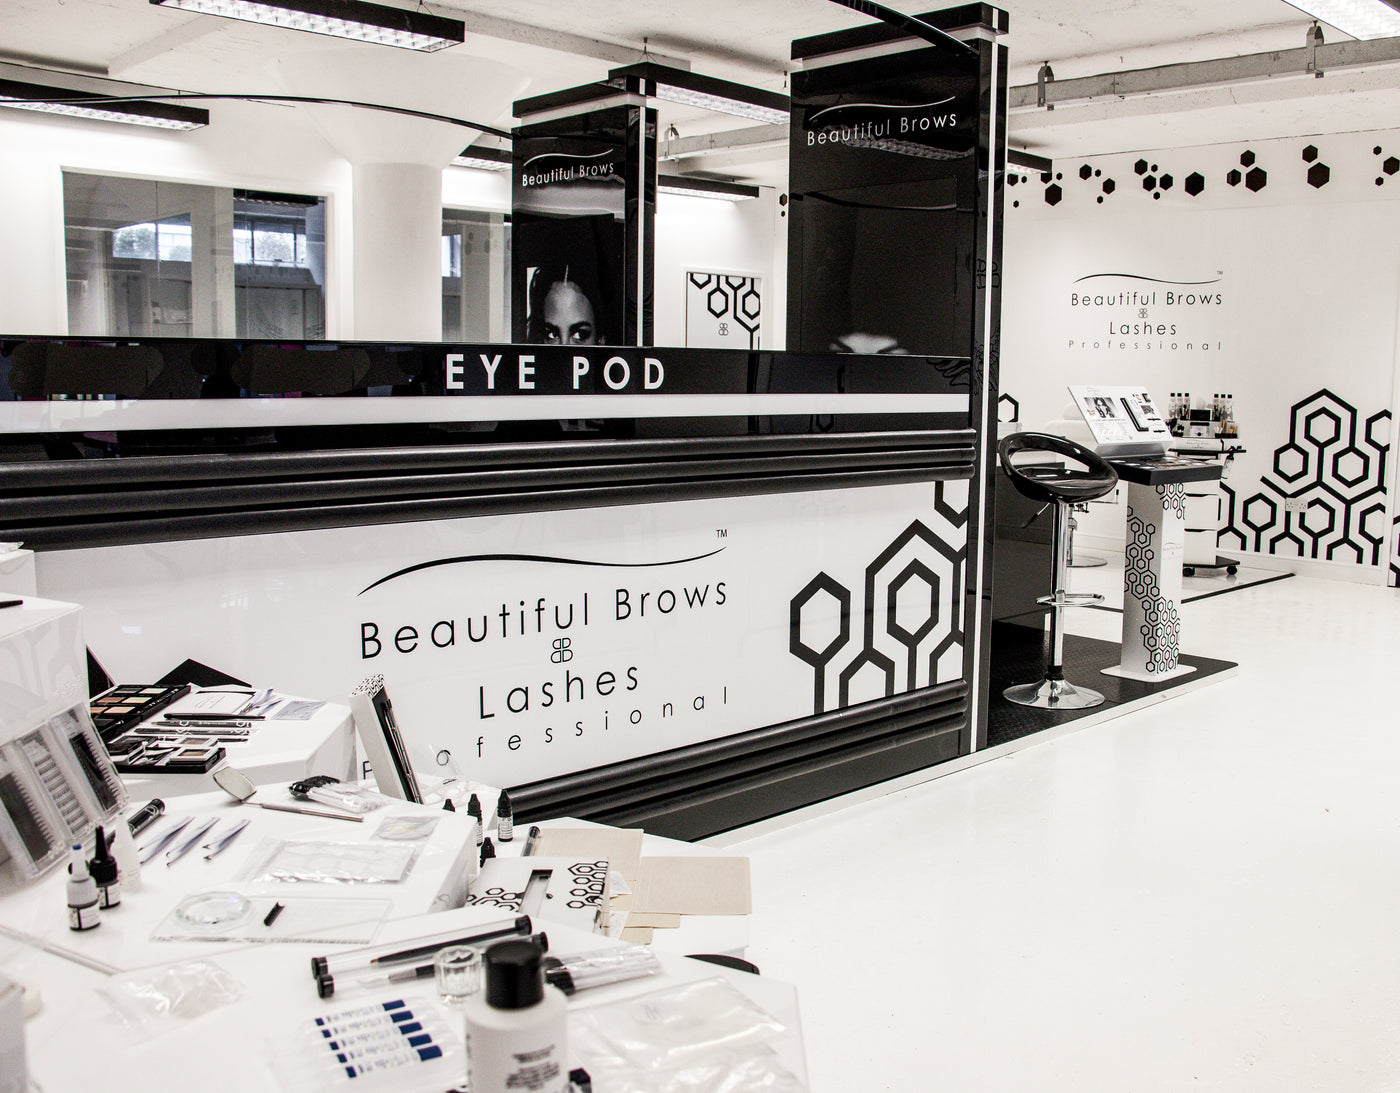 Classic Semi Permanent Eyelash Course - Liverpool HQ